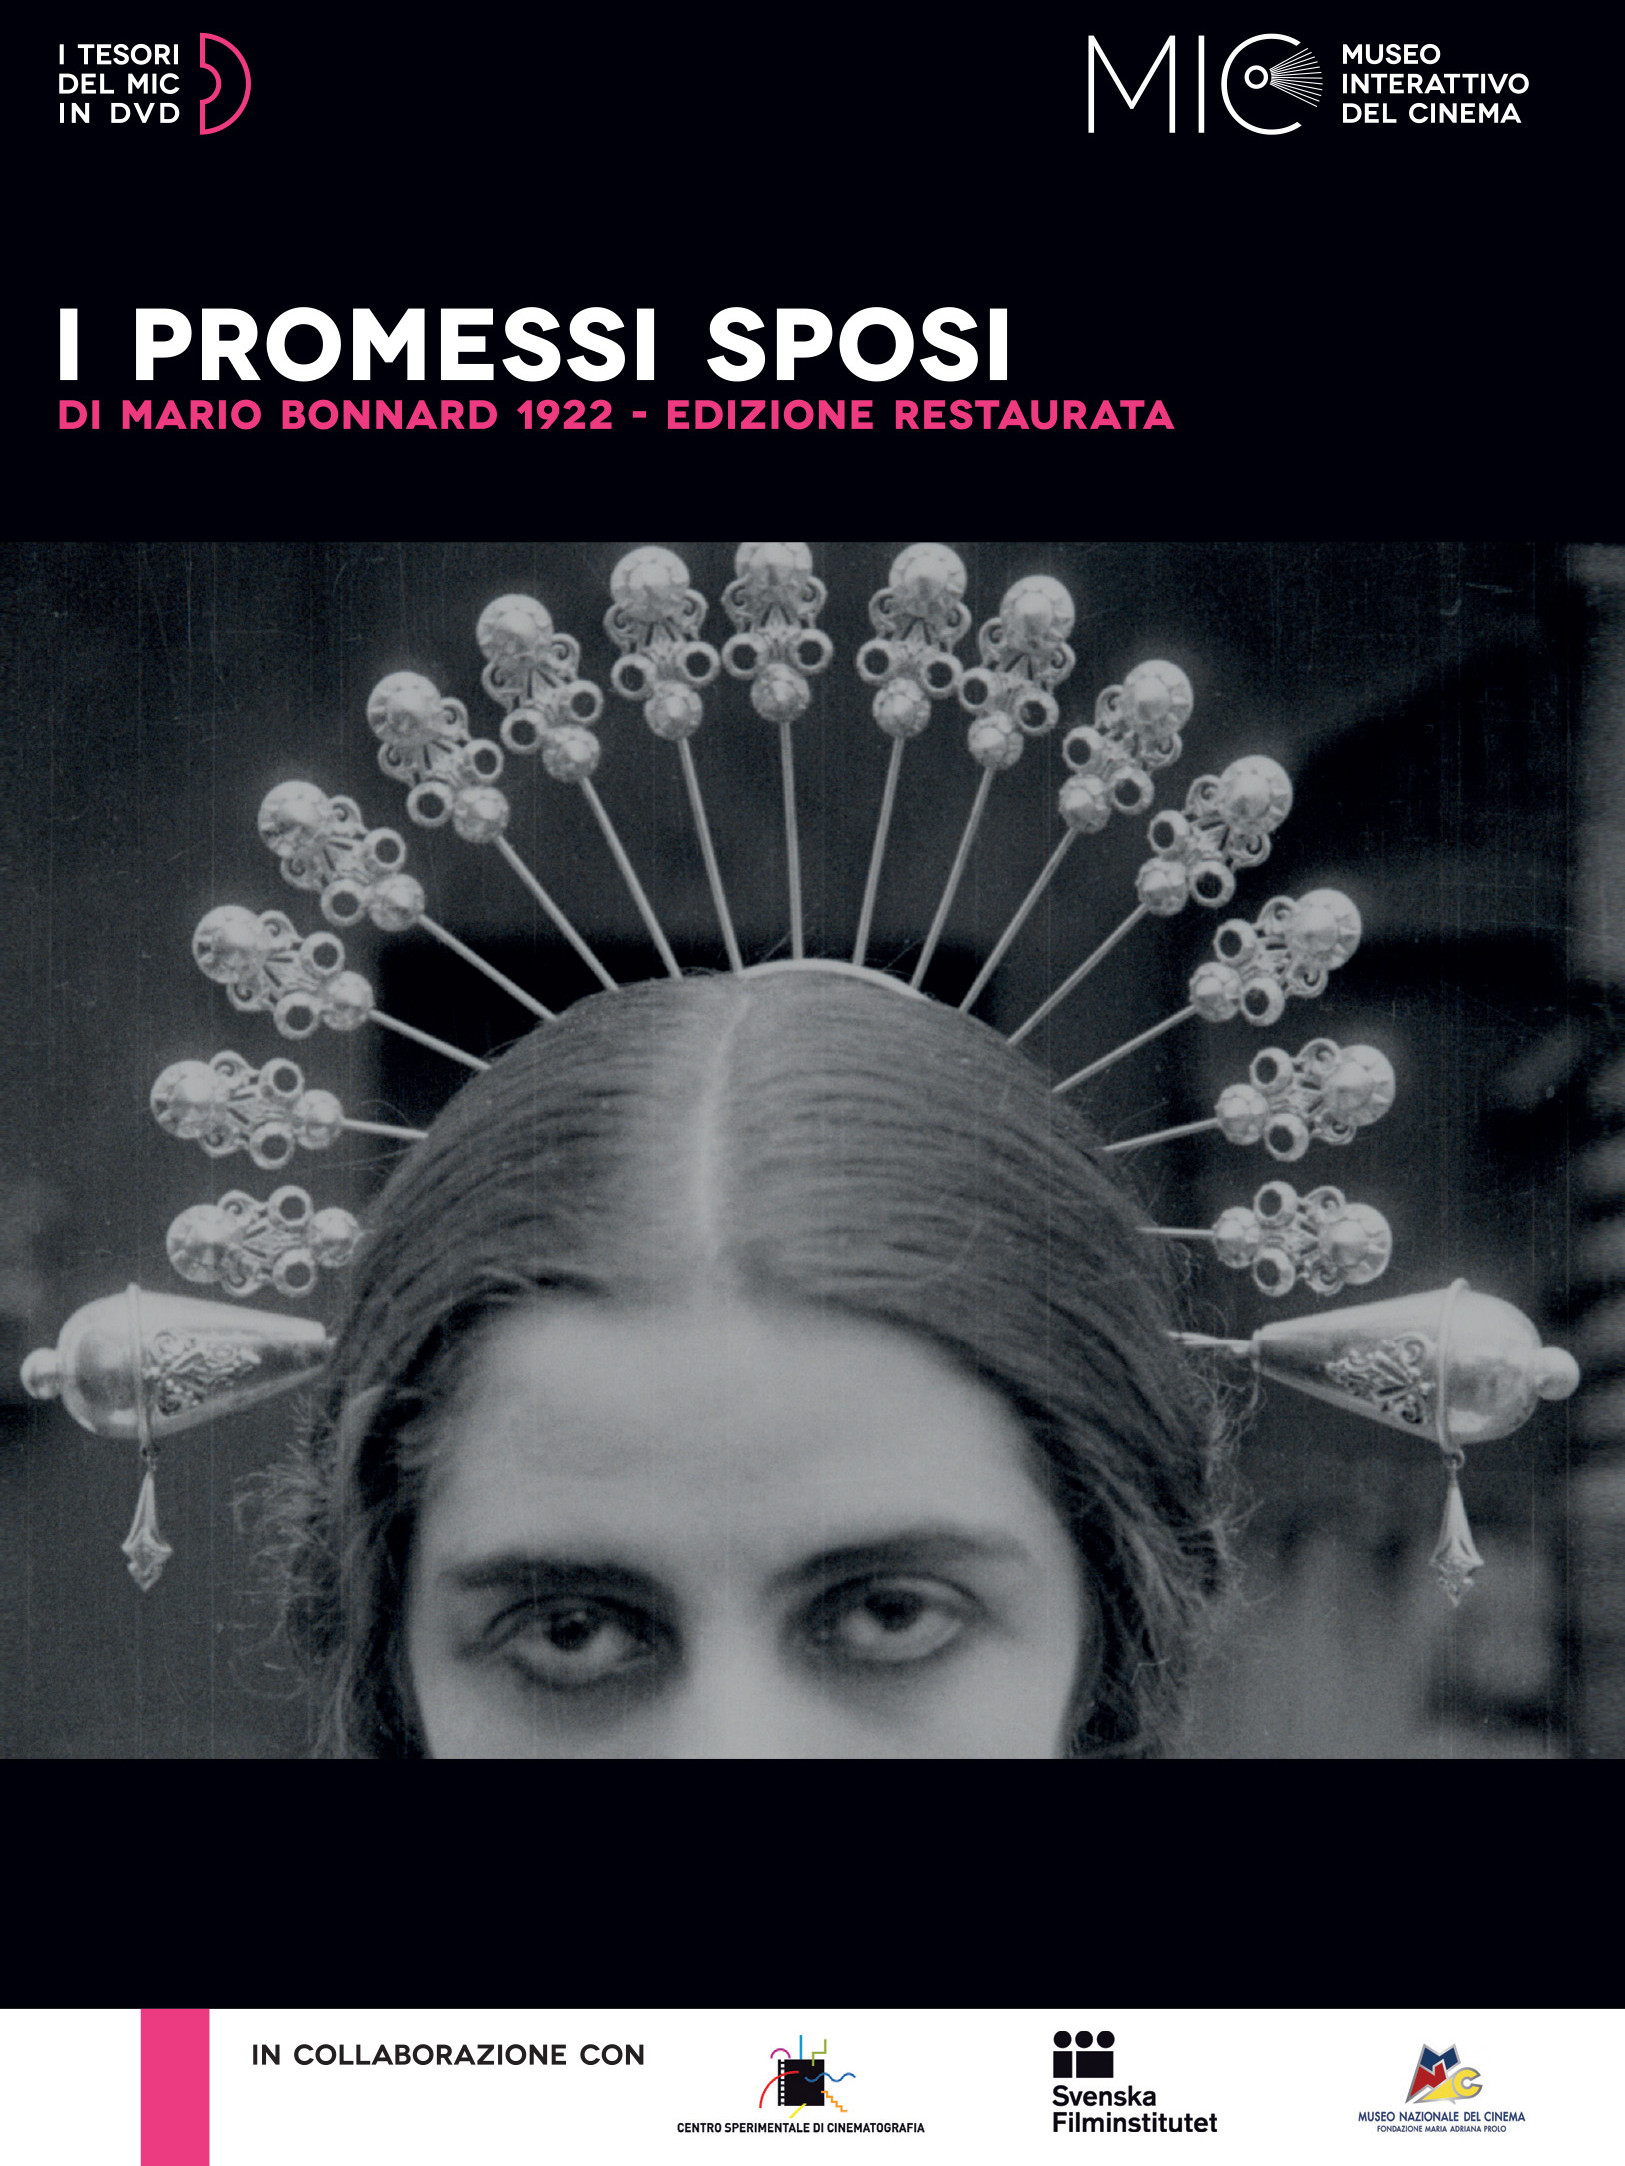 I PROMESSI SPOSI (MARIO BONNARD, 1922)